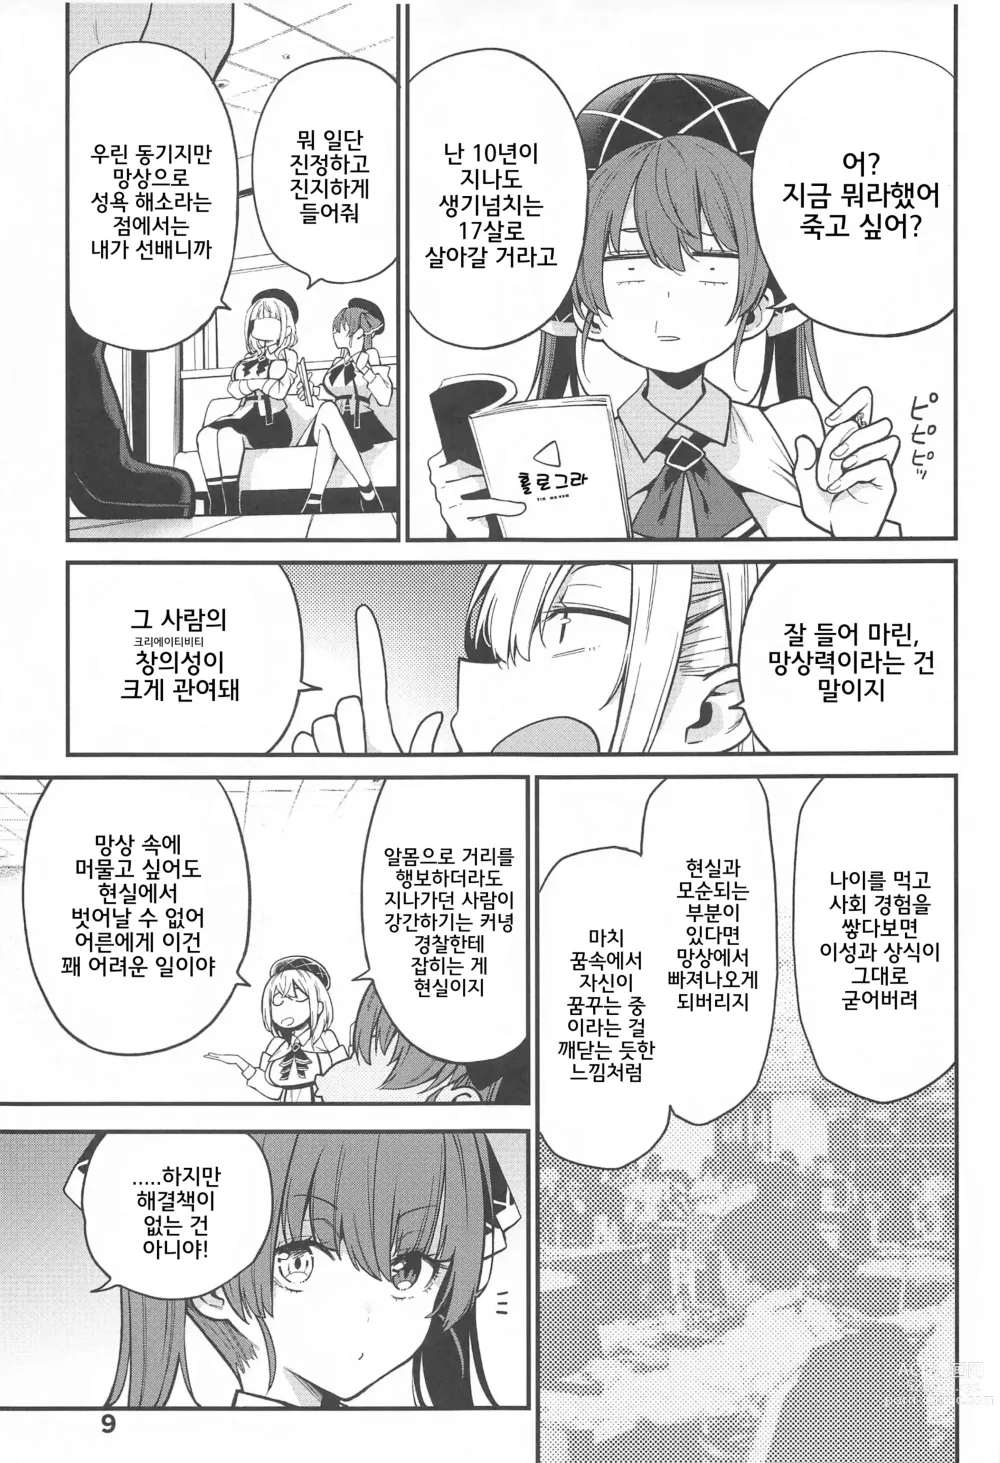 Page 10 of doujinshi 호쇼의 쇼타 이치미 망상극장